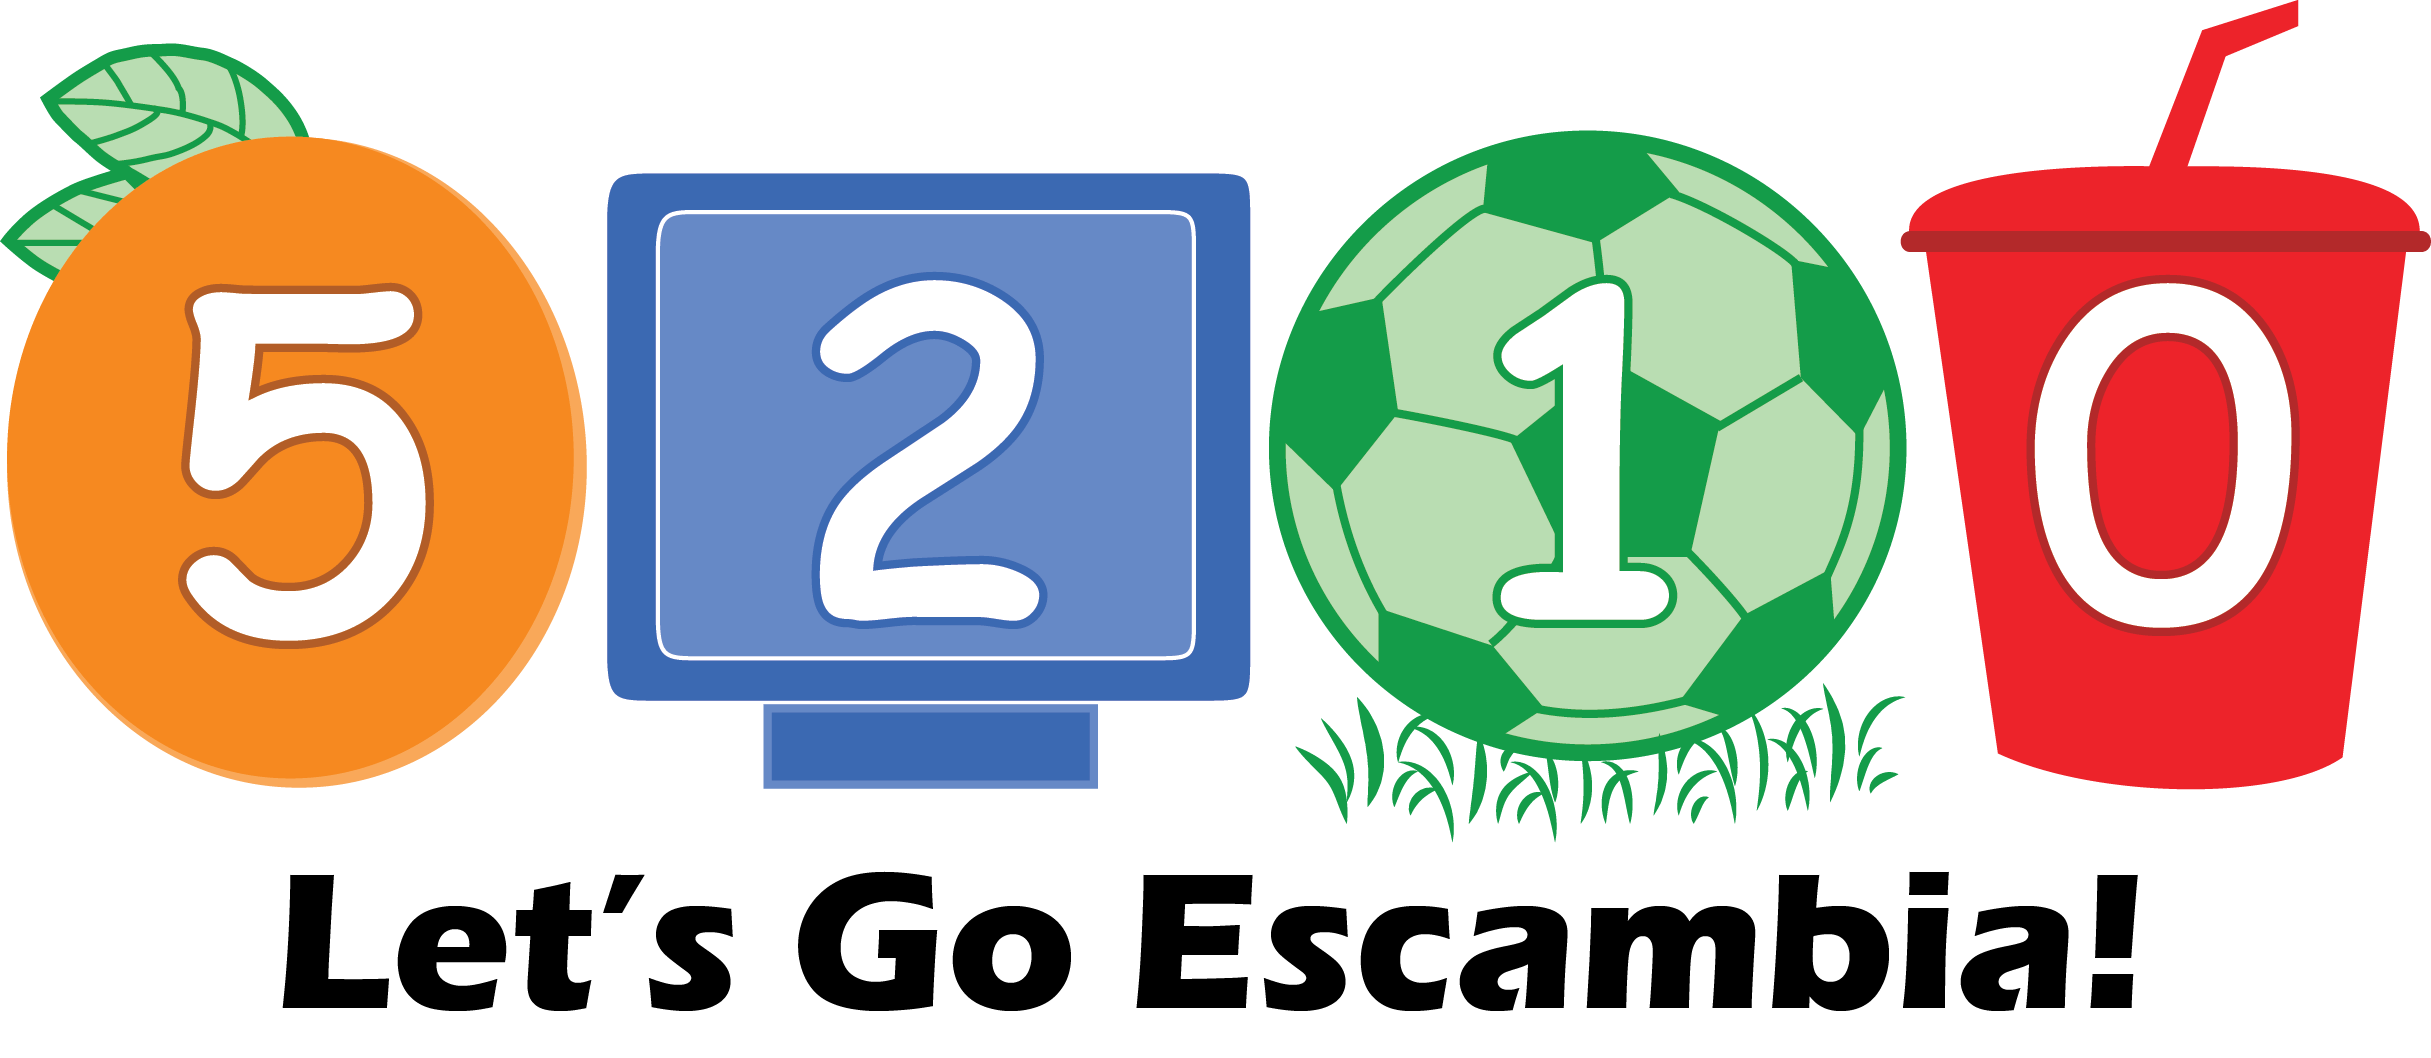 Escambia Logo - 5 2 1 0 Let's Go Northwest Florida!. Florida Department Of Health